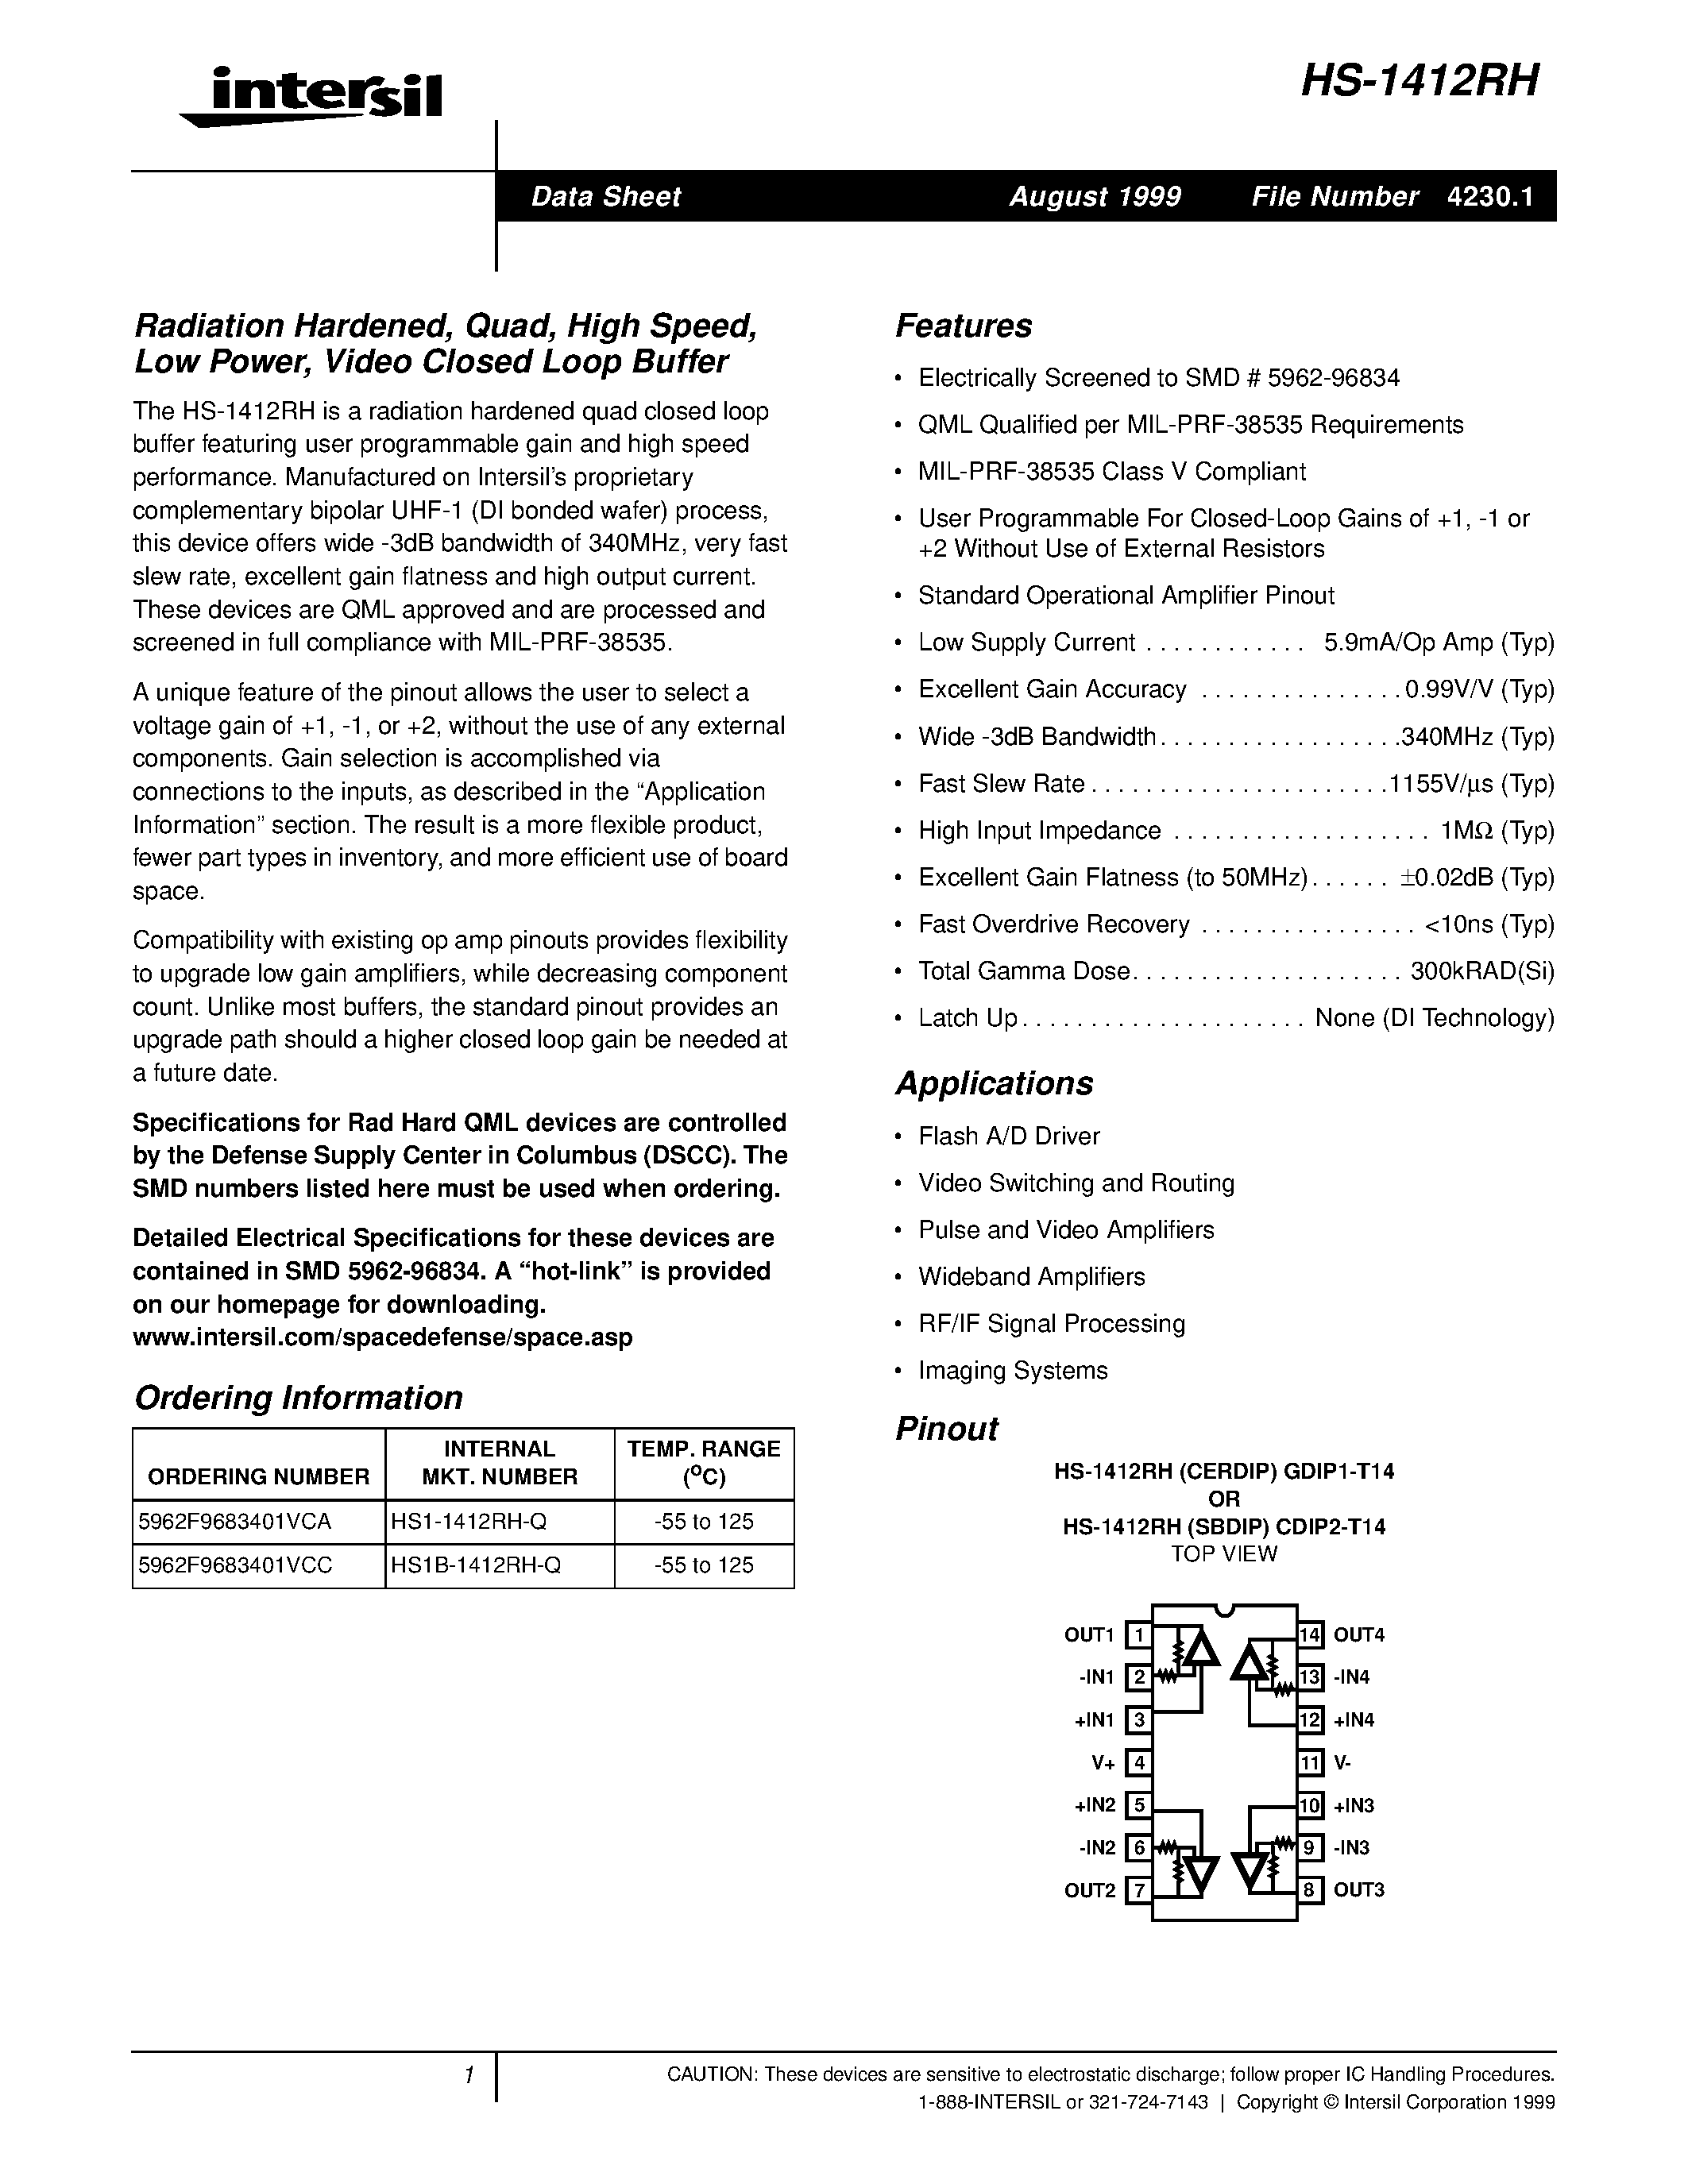 Datasheet HS1-1412RH-Q - Radiation Hardened/ Quad/ High Speed/ Low Power/ Video Closed Loop Buffer page 1